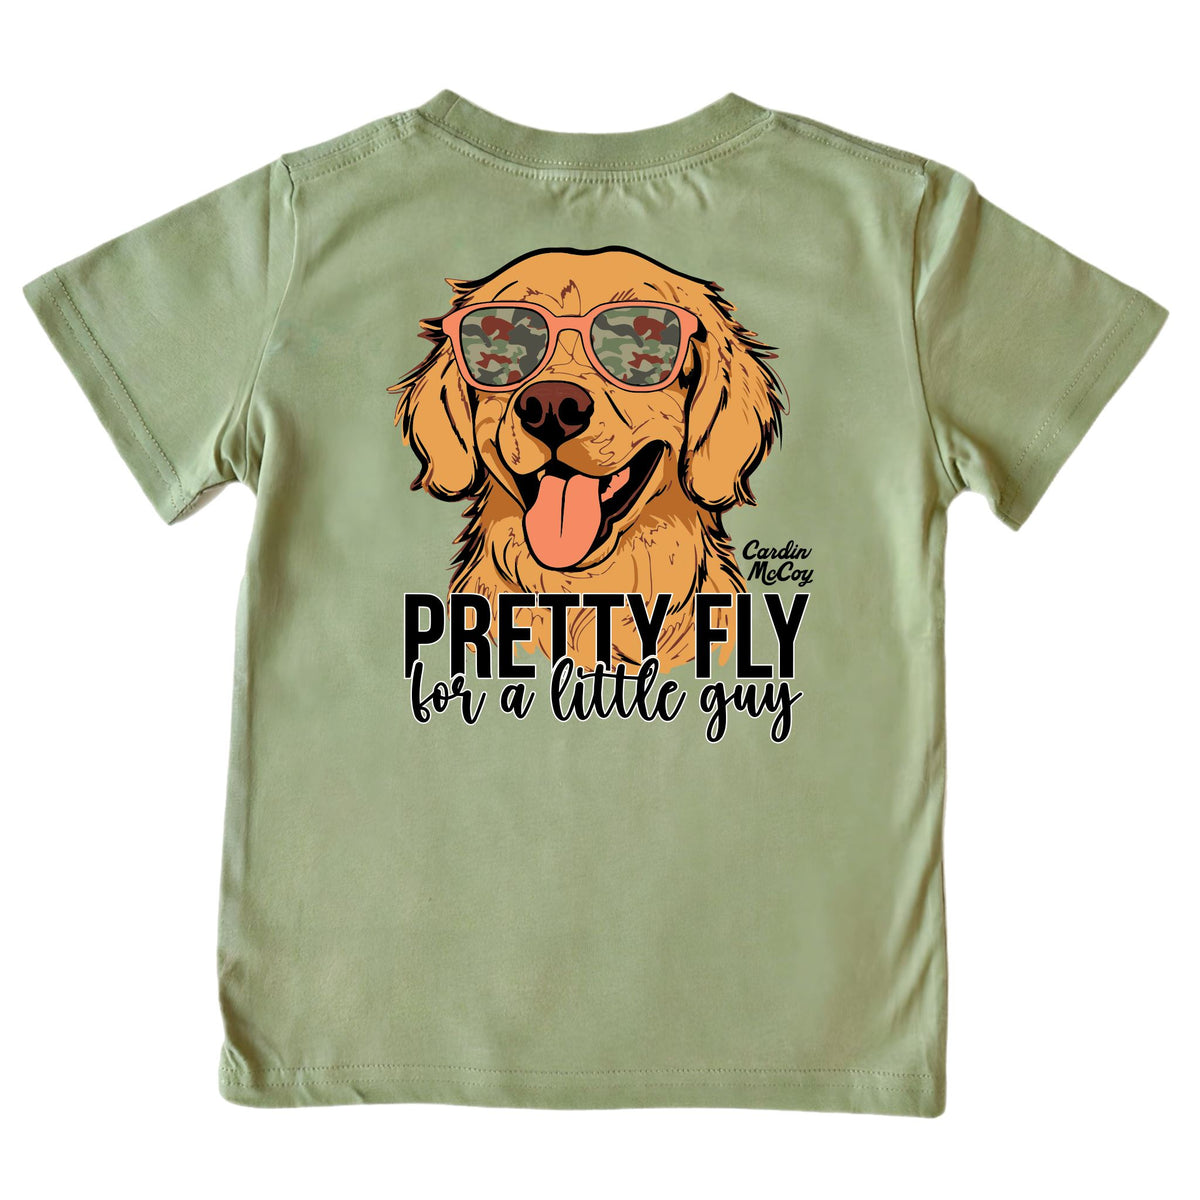 Boys' Pretty Fly Short-Sleeve Tee Short Sleeve T-Shirt Cardin McCoy Light Olive XXS (2/3) Pocket